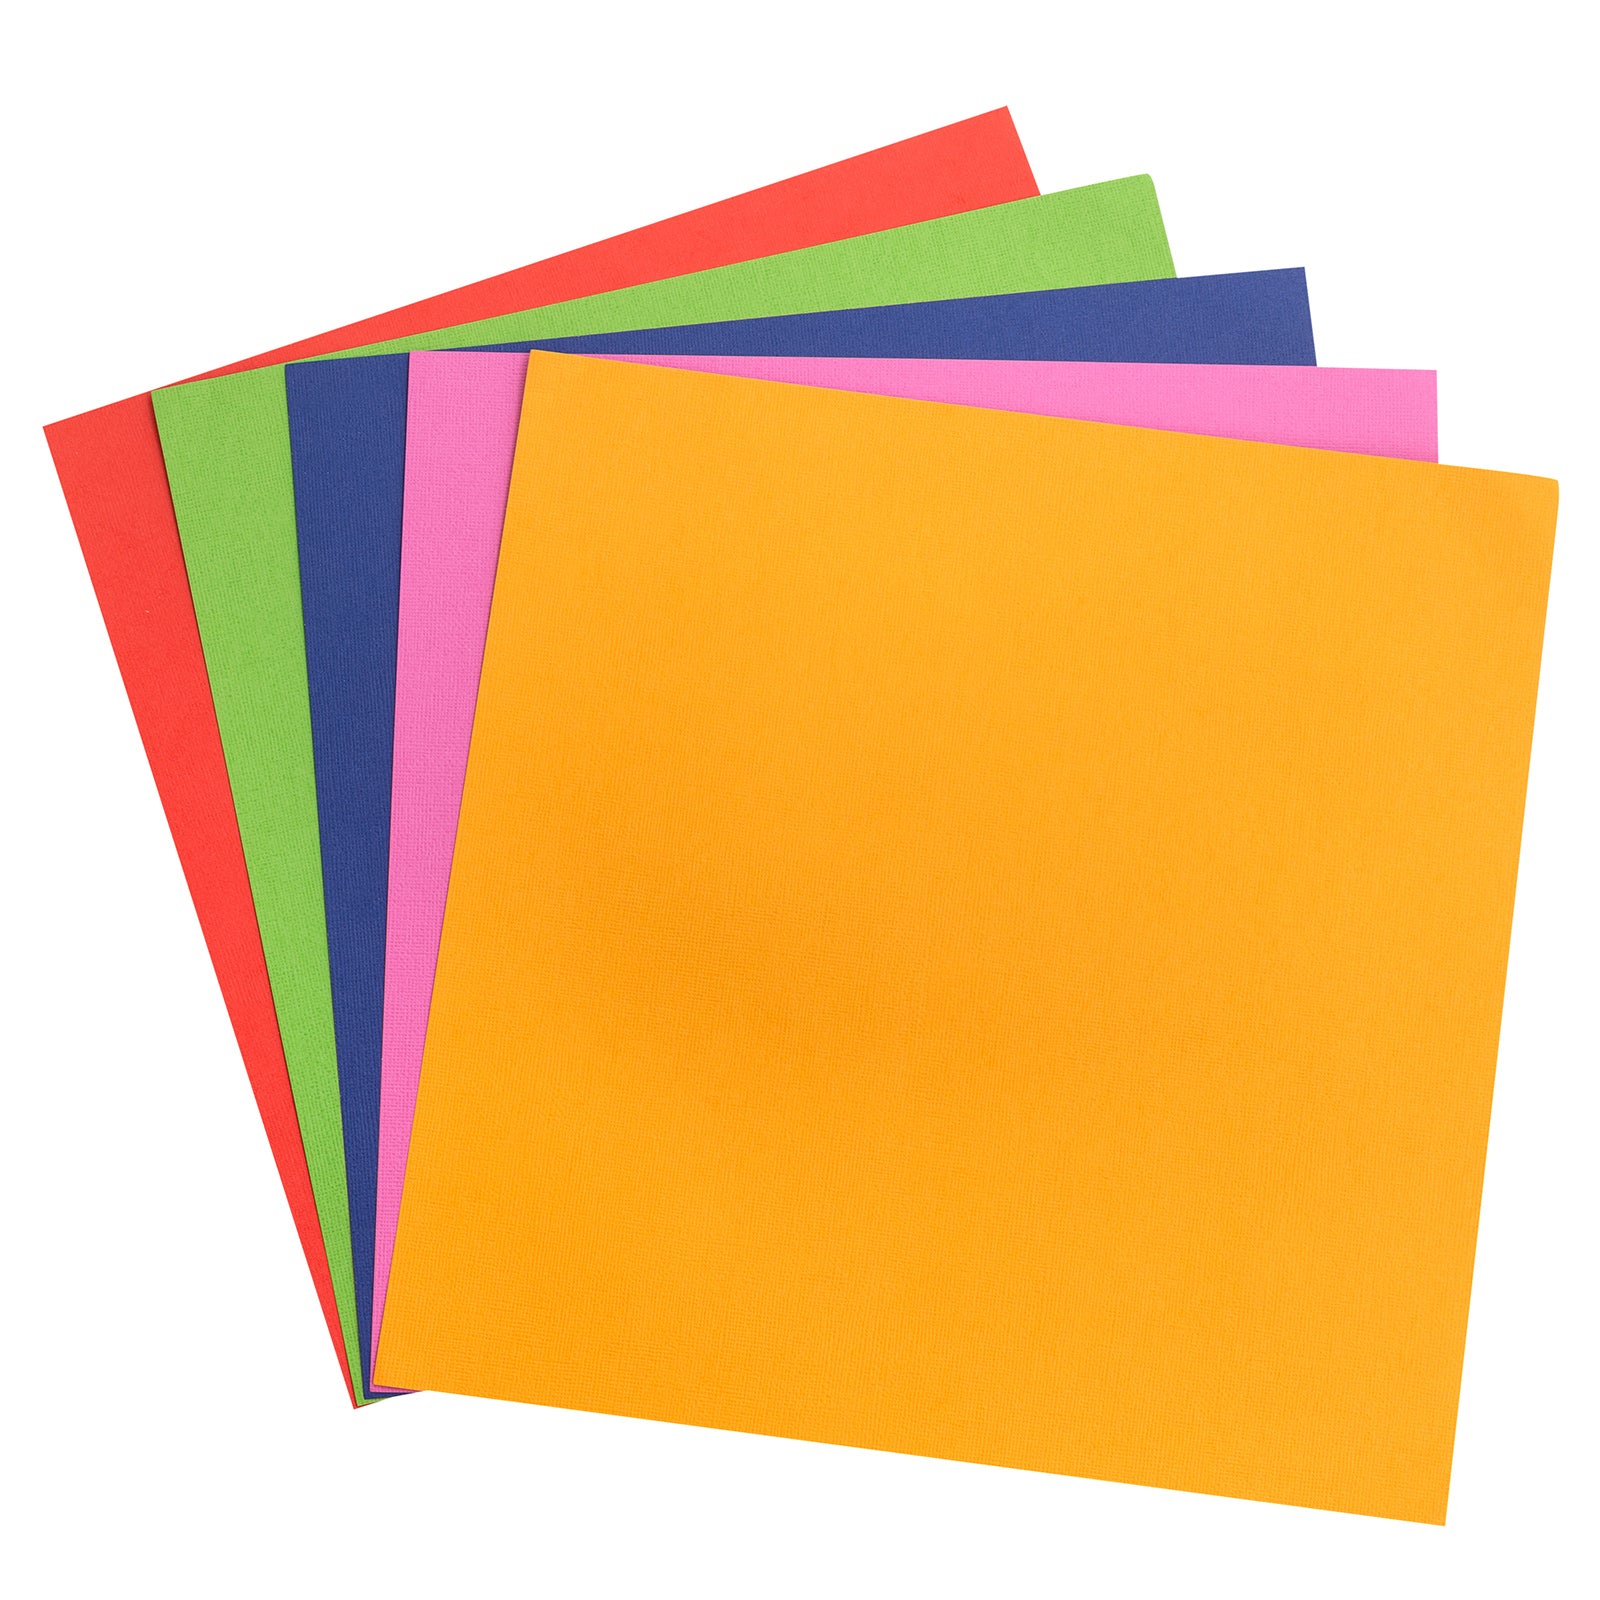 NIP Stampin' Up Brights 12x12 Cardstock Paper Pack